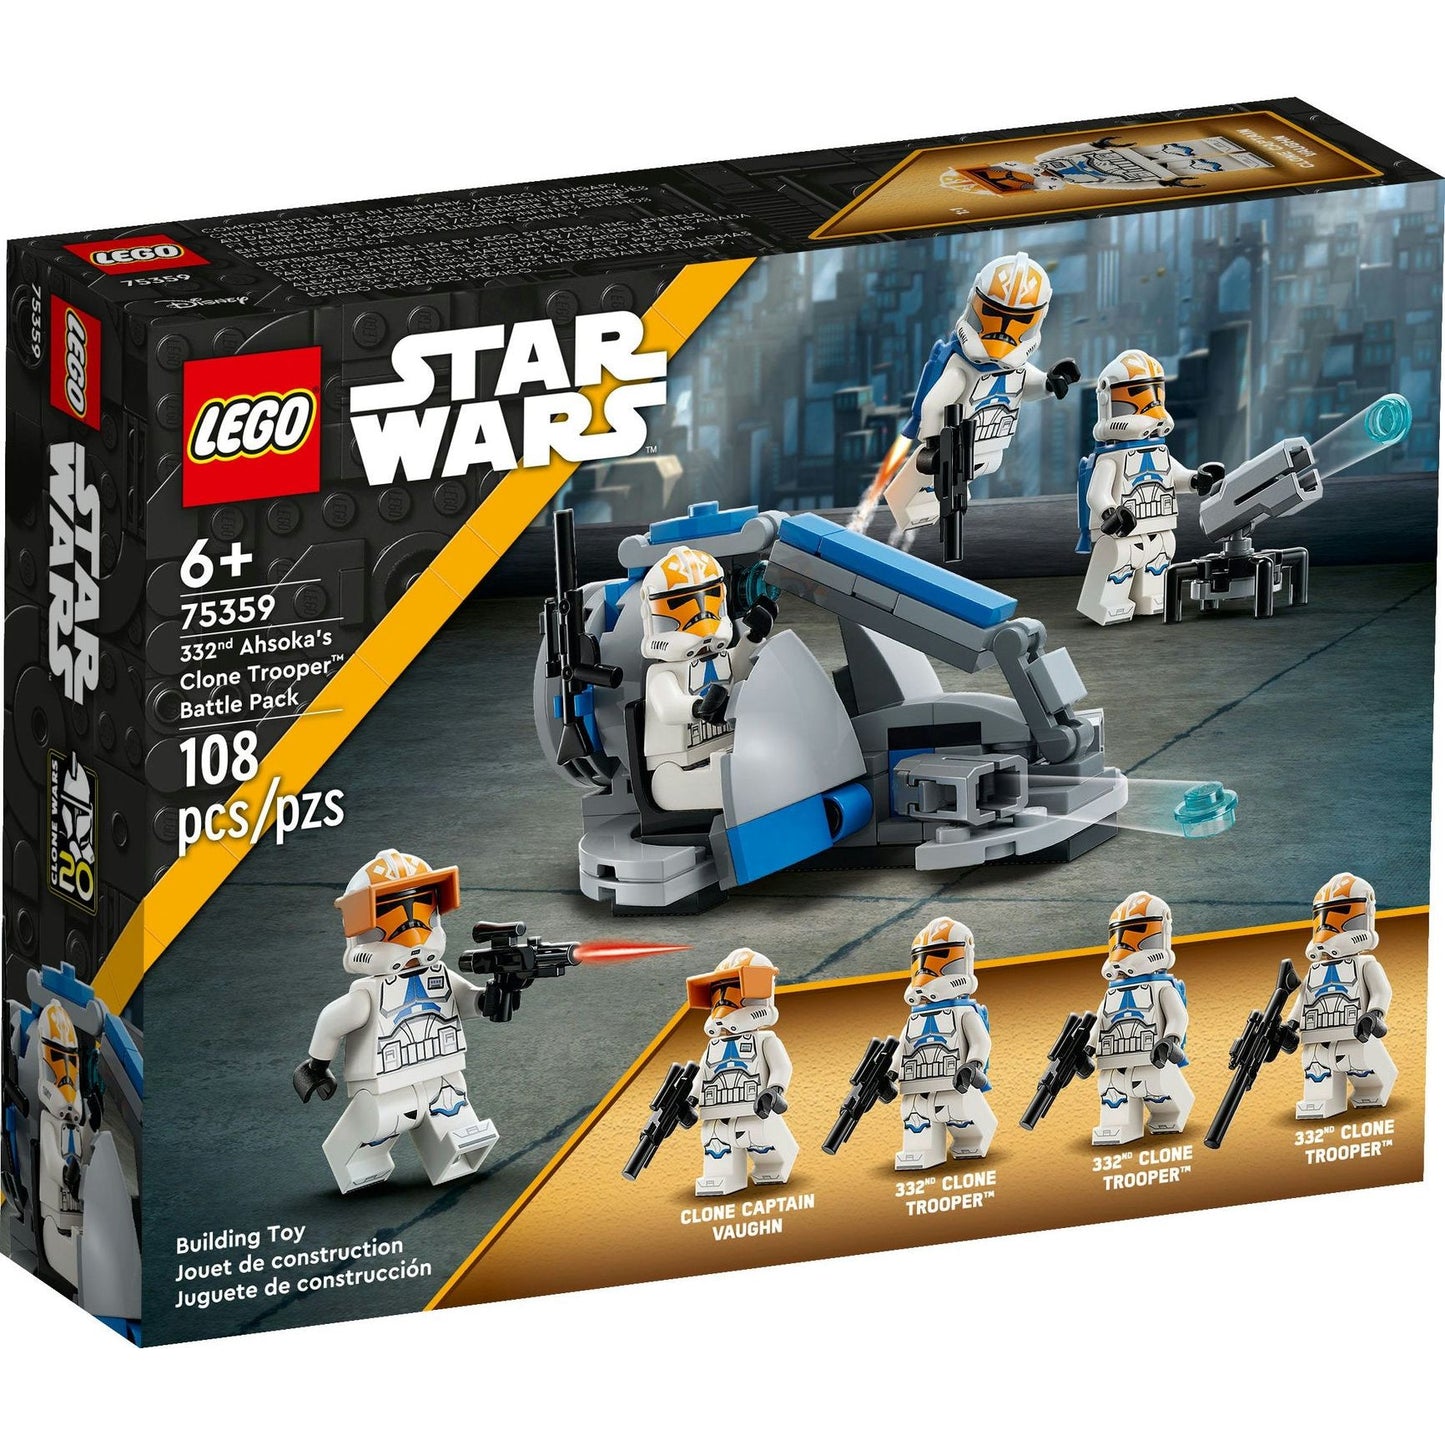 Lego Star Wars 332nd Ahsoka's Clone Troopers Battle Pack - Treehouse Toy Co.